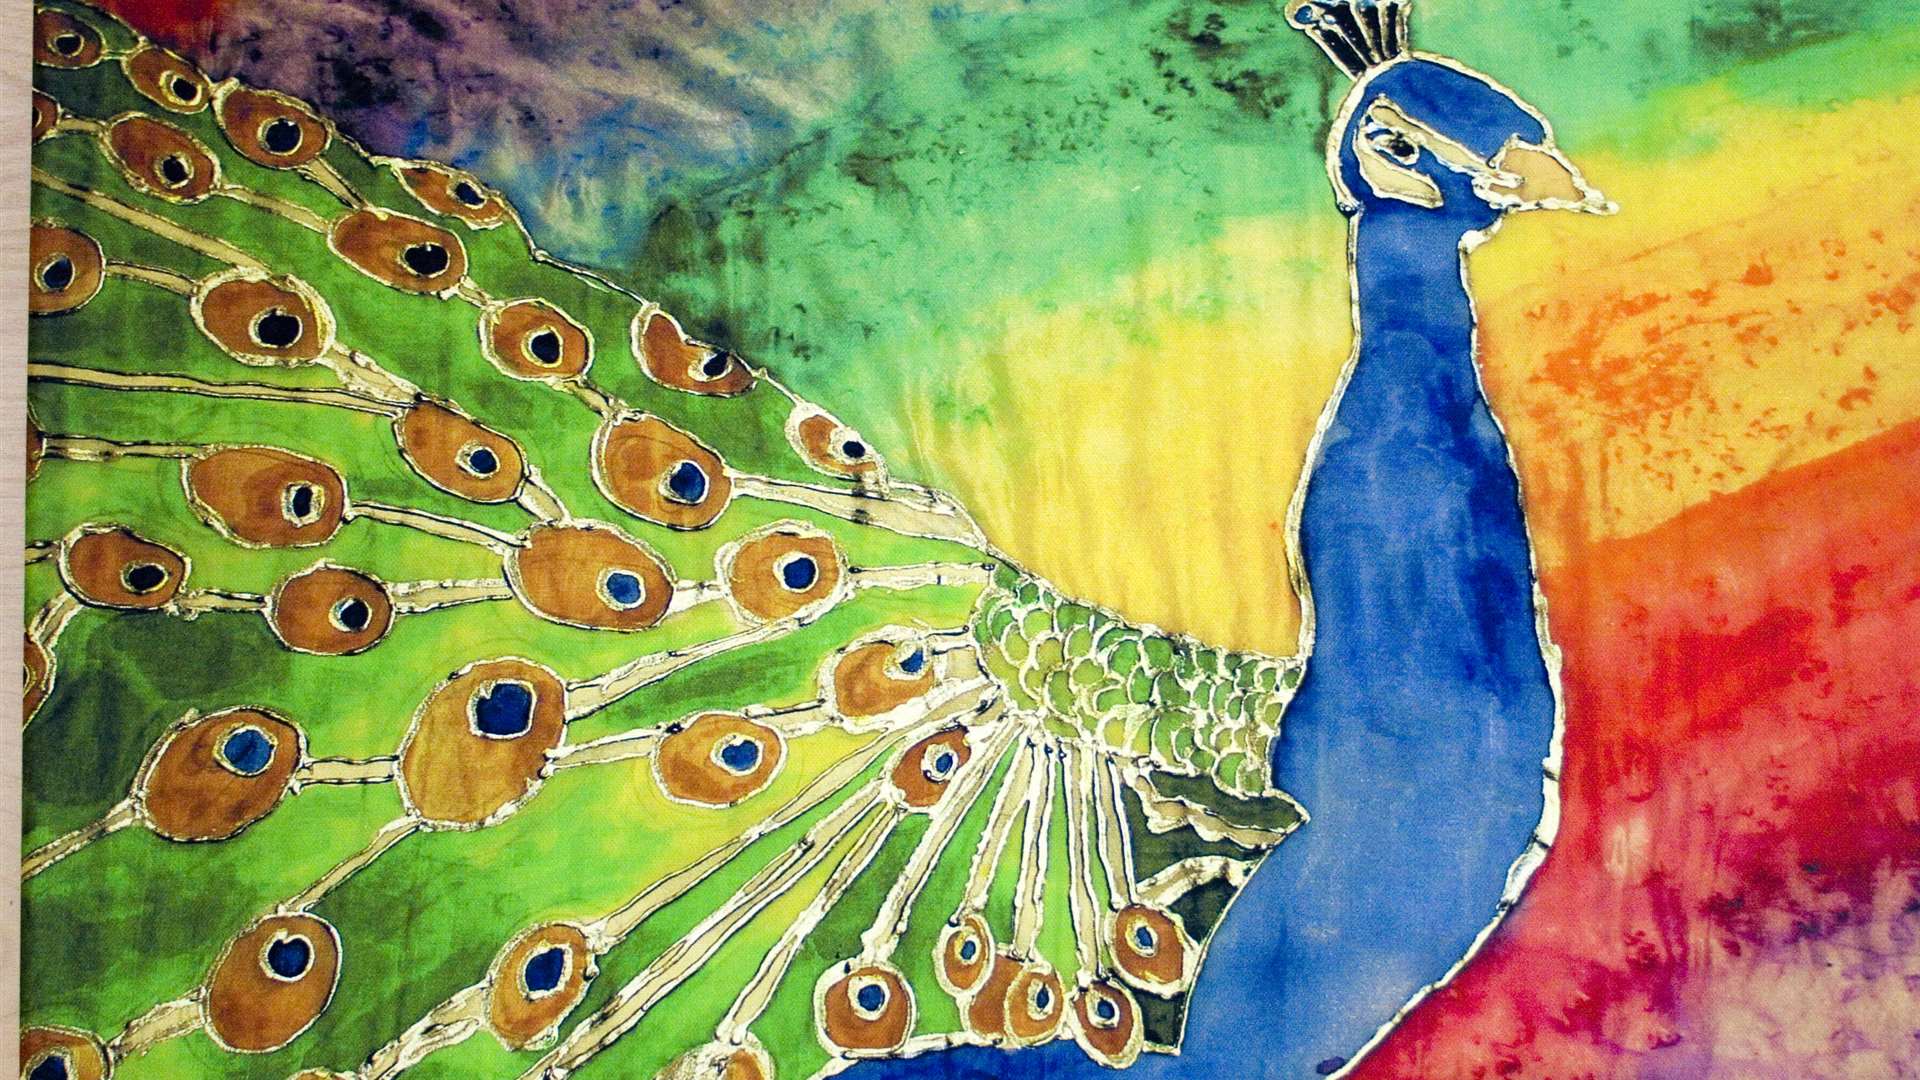 'Peacock' by Kelly Turner, 2016, print of original piece